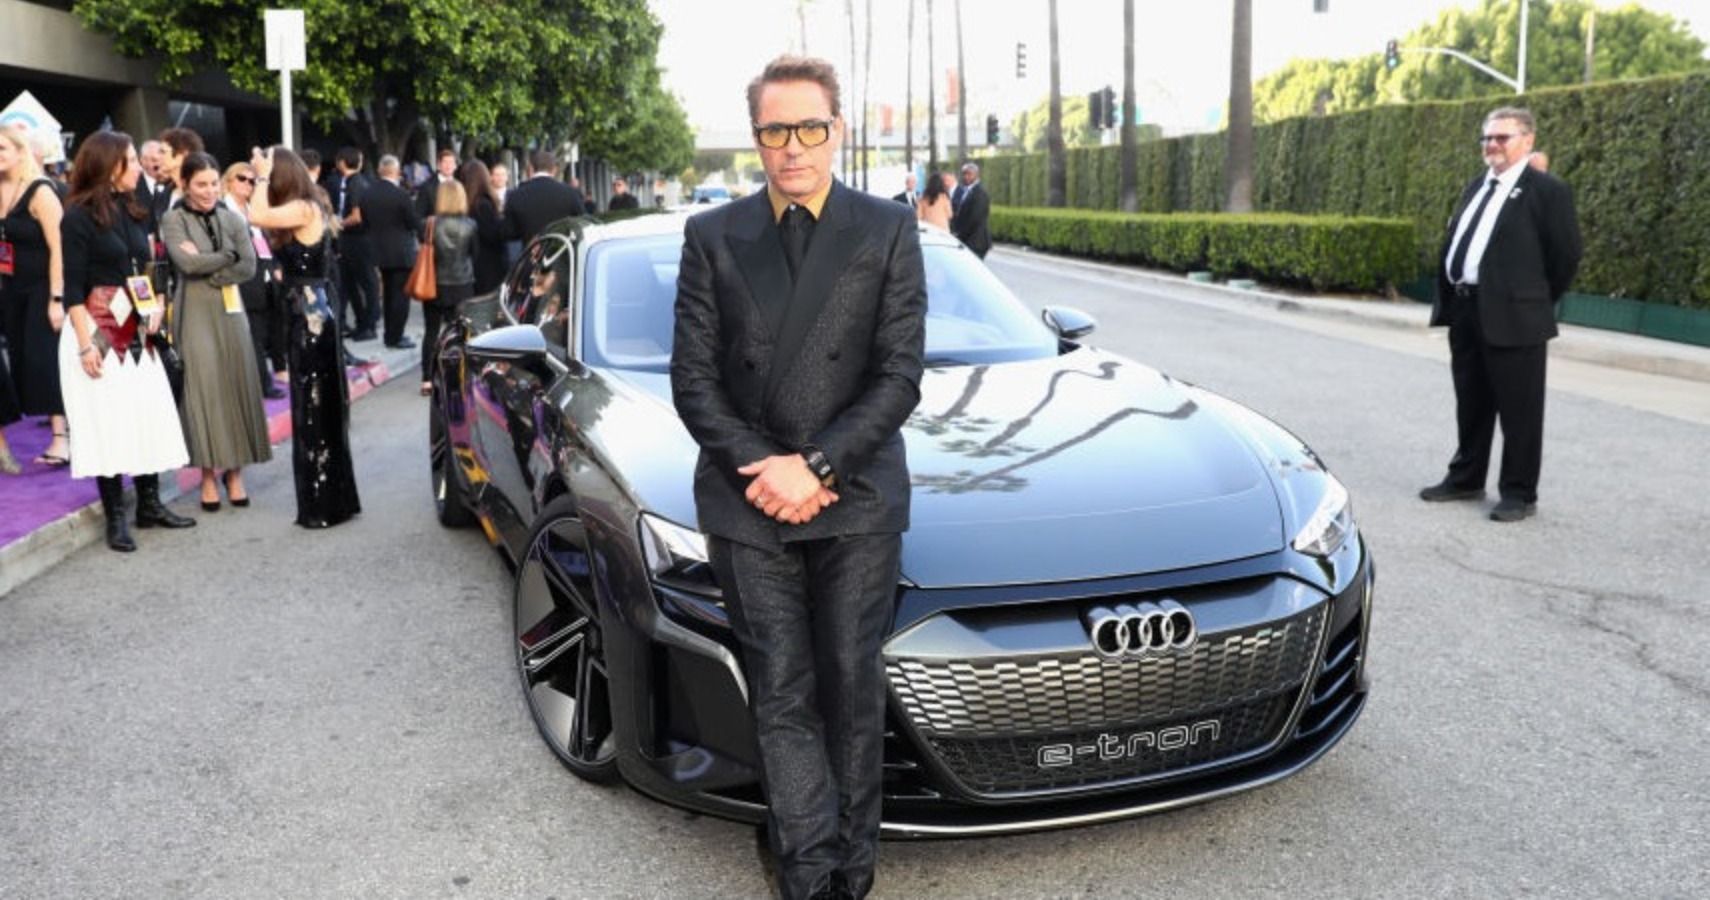 Robert Downey Jr. standing next to his Audi e-tron GT